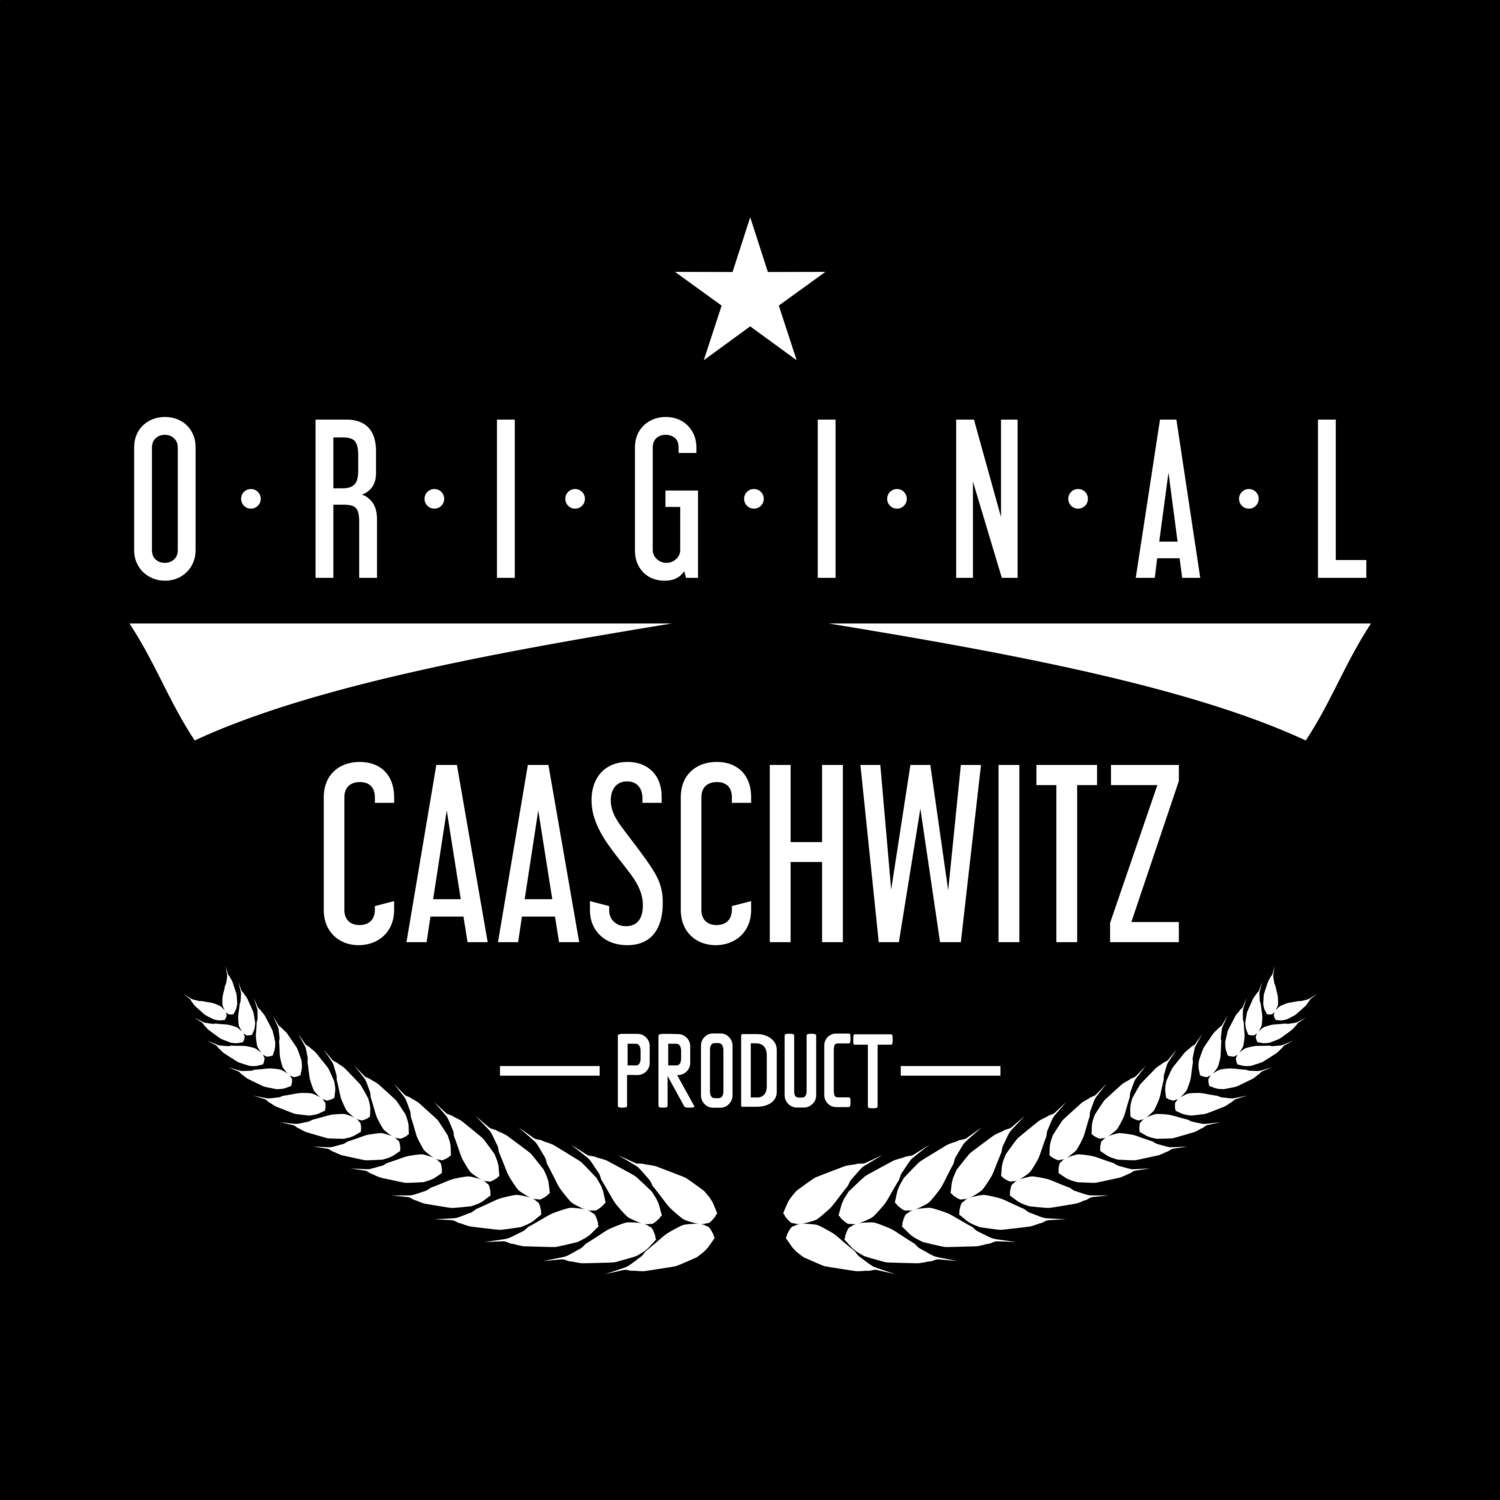 Caaschwitz T-Shirt »Original Product«